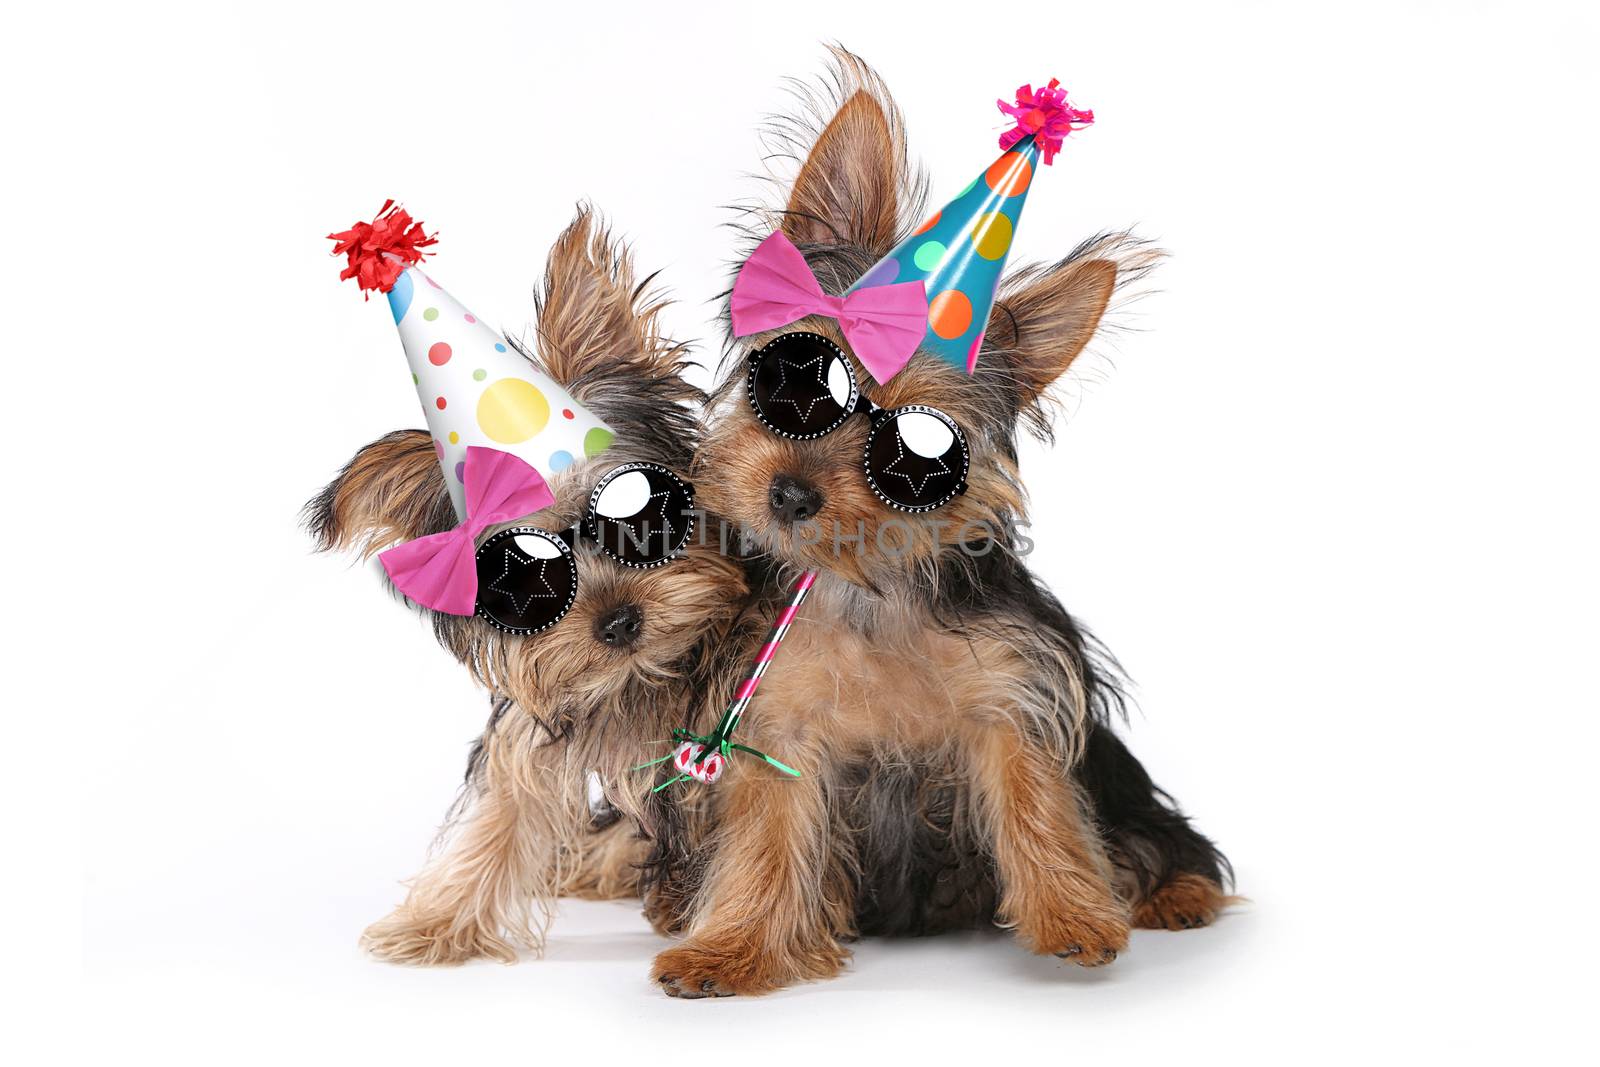 Happy Birthday Theme Yorkshire Terrier Puppies on White Singing